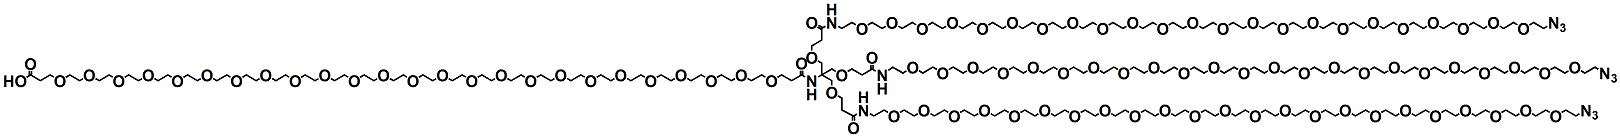 Molecular structure of the compound: Acid-PEG25-Amide-Tri(3-methoxypropanamide-PEG23-Azide) Methane